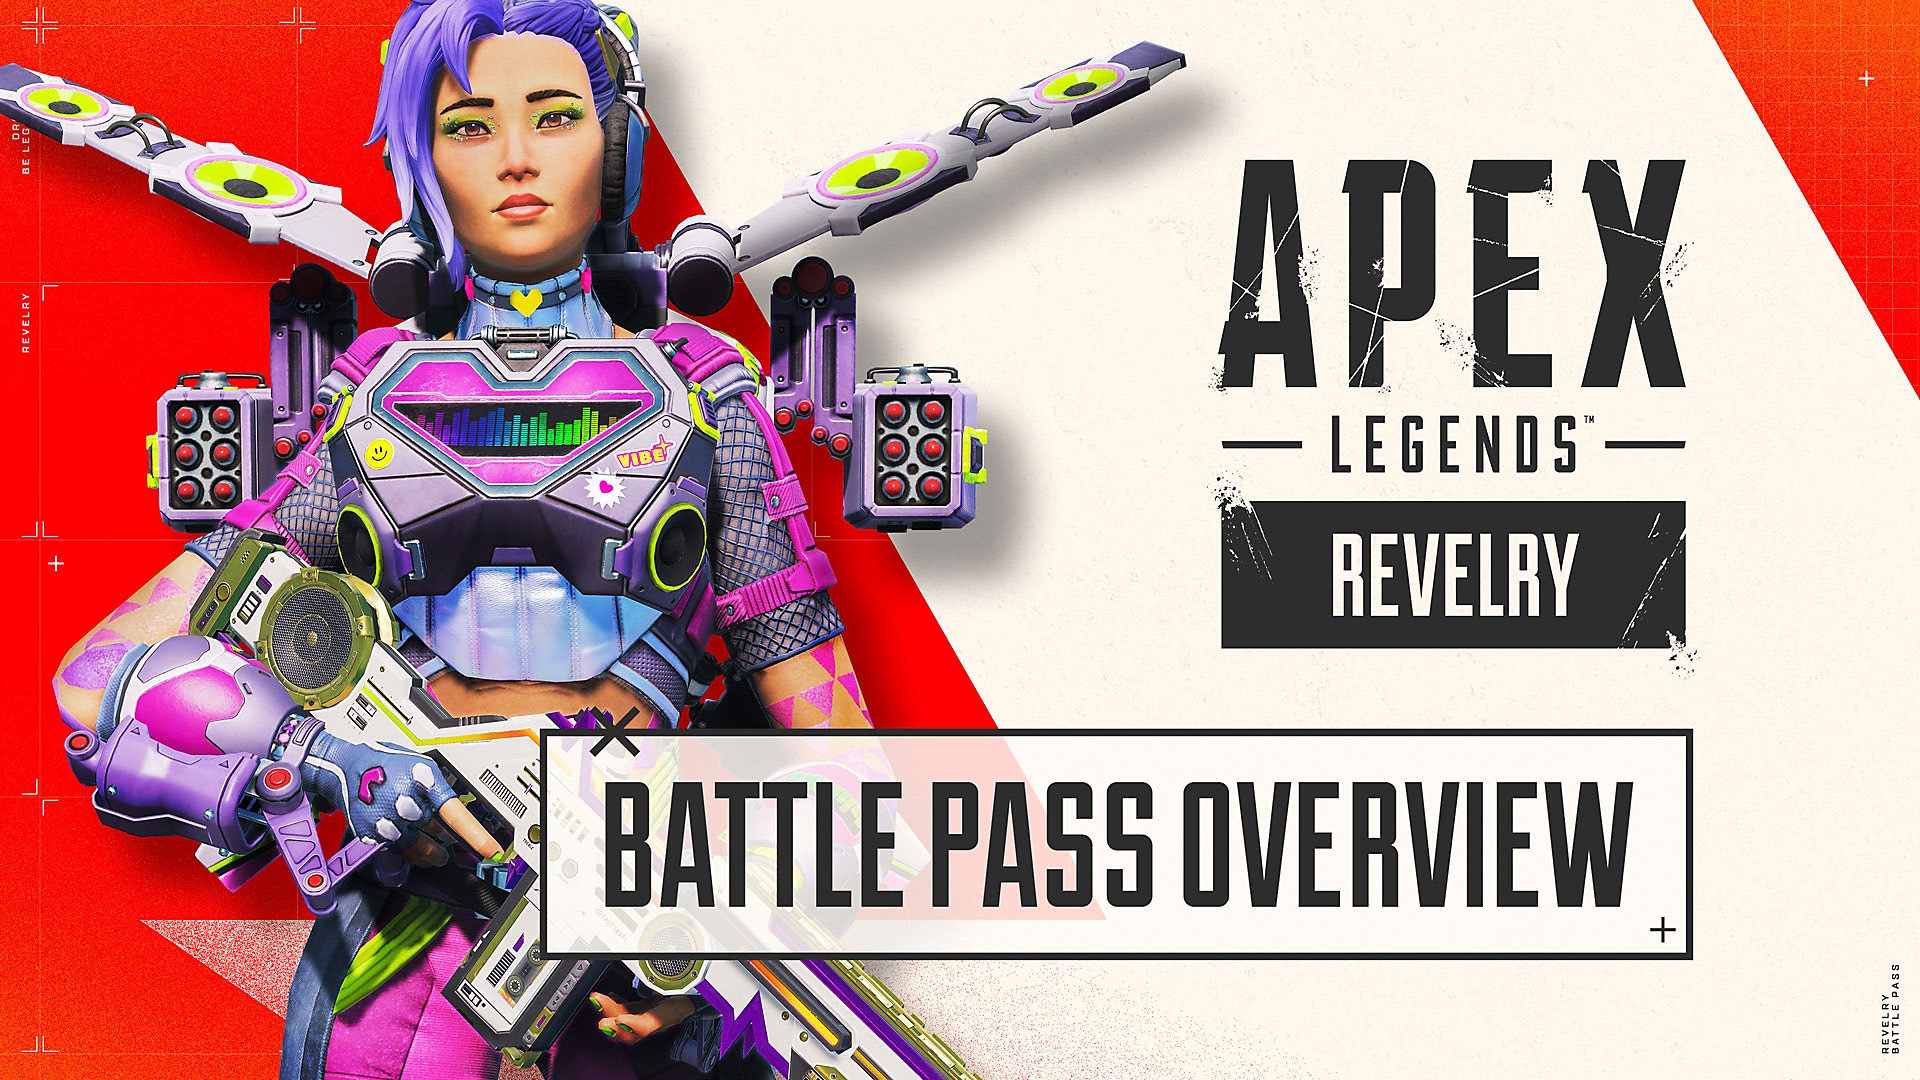 Apex Legends - Hunted Battle Pass Overview Trailer